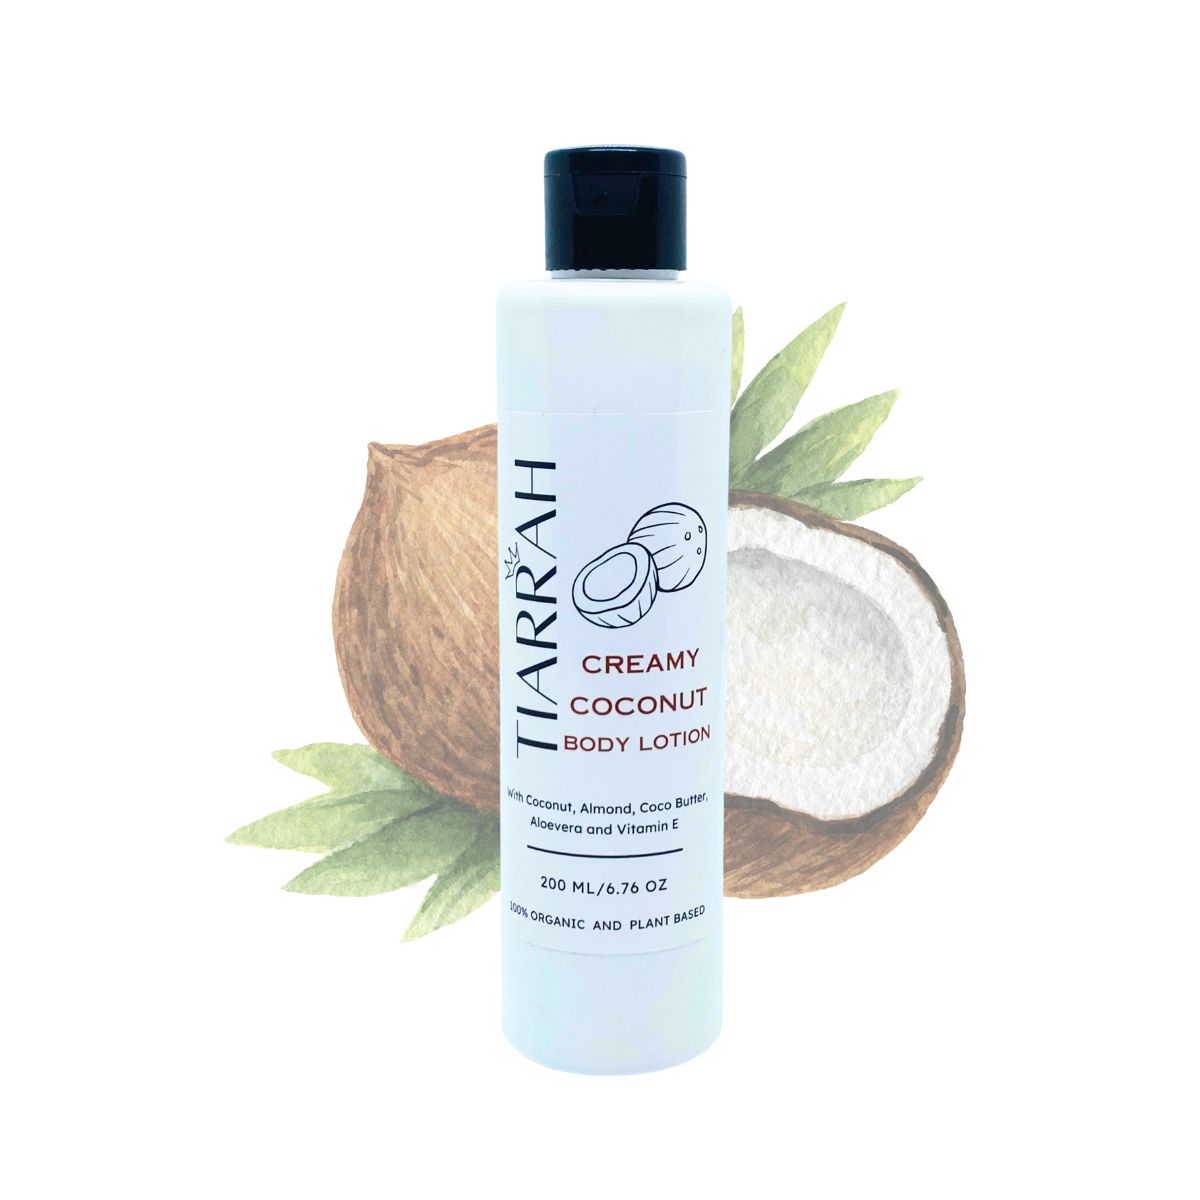 Tiarrah Creamy Coconut Body Lotion: Natural, Organic, Non-Toxic - The Luxury Bath and Body Care Shop